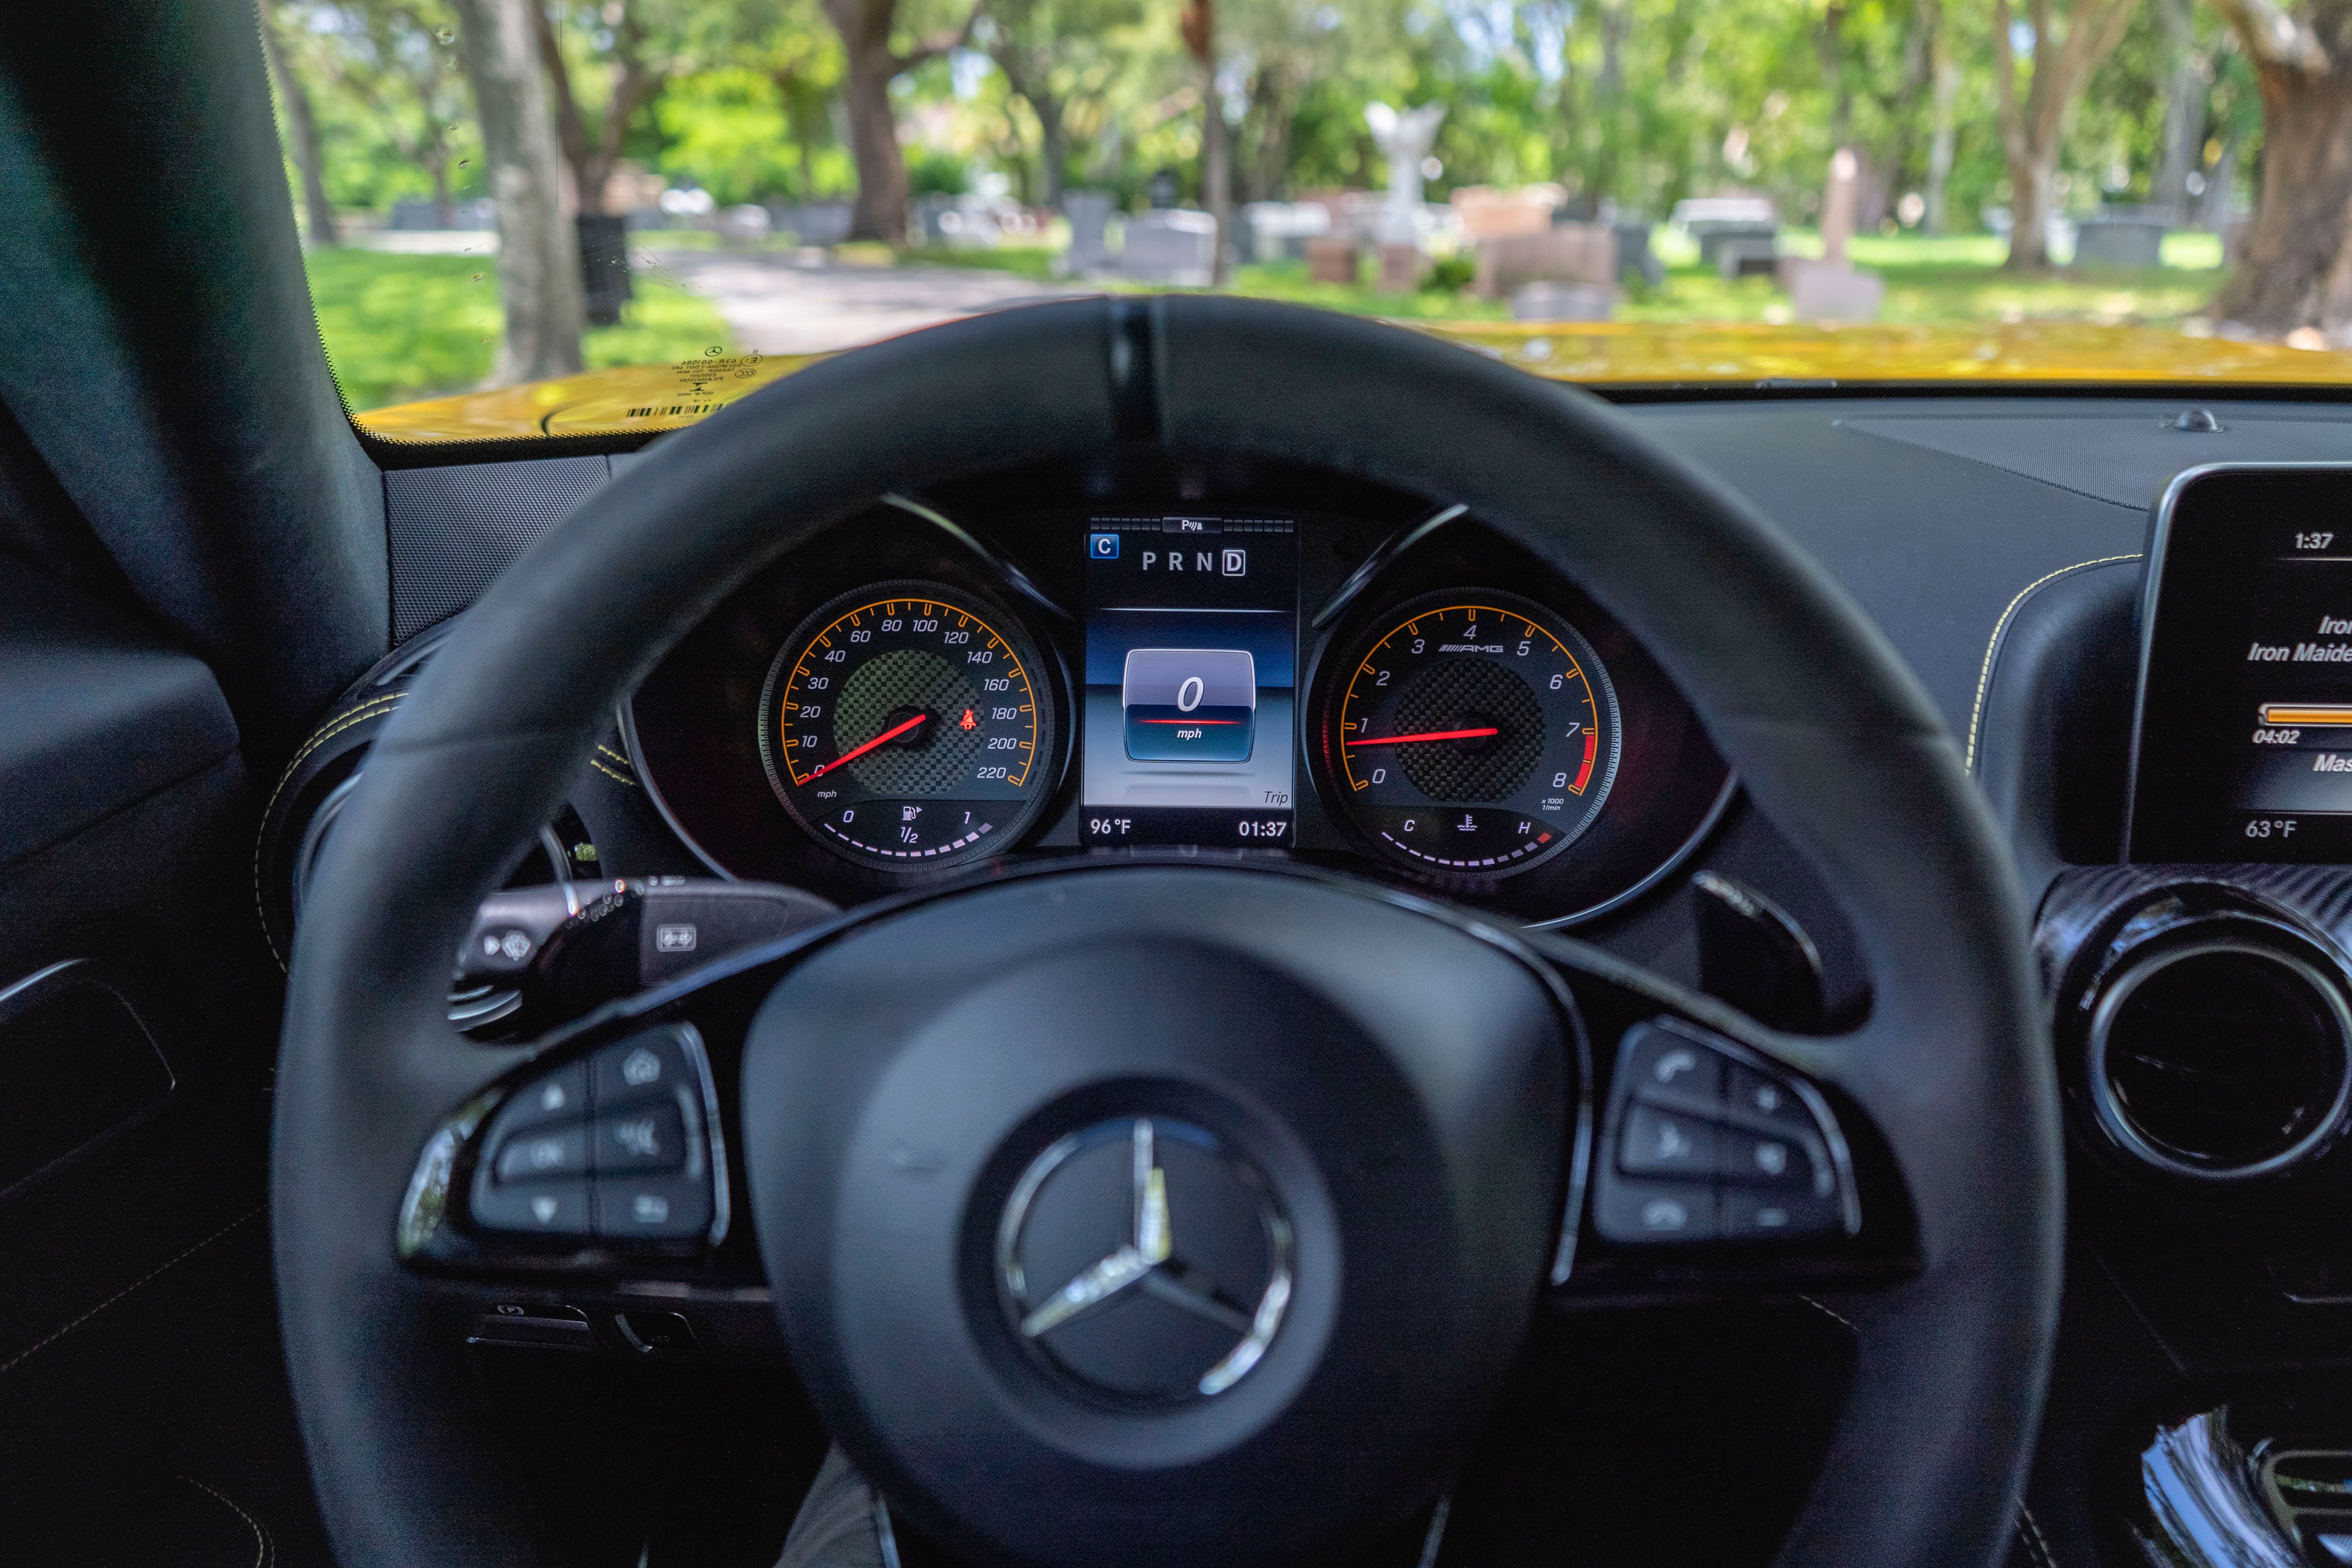 2019 Mercedes-AMG GT C Roadster - Driven